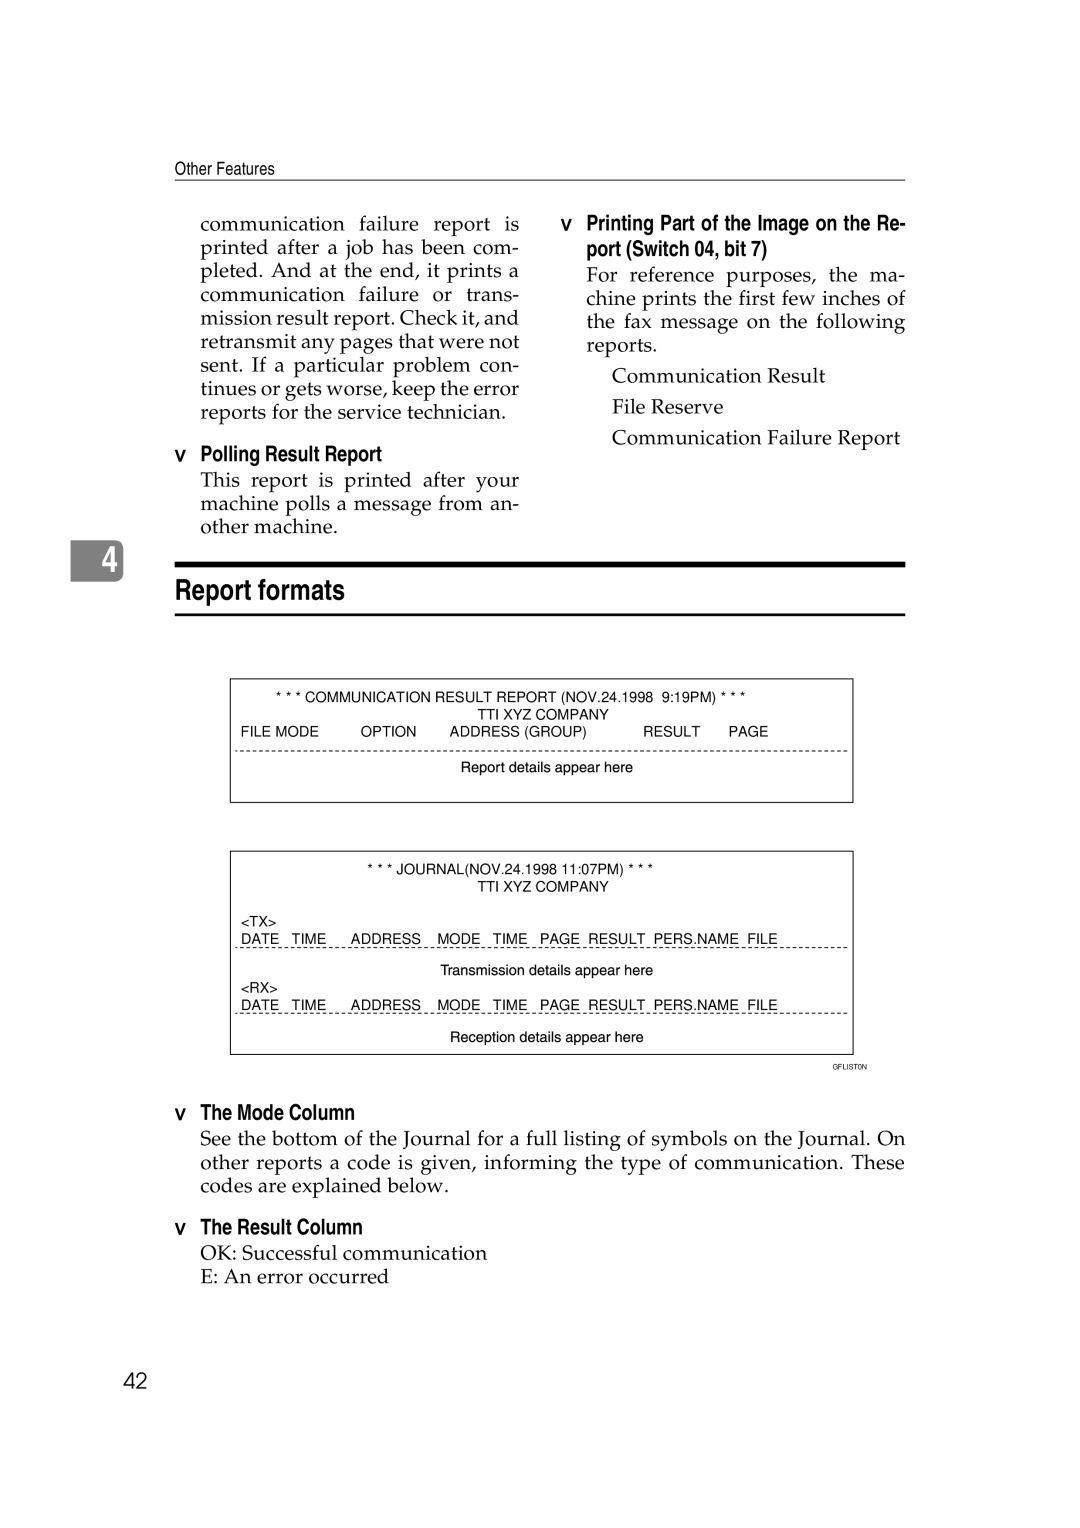 Ricoh H545 manual Report formats, Mode Column, Result Column 